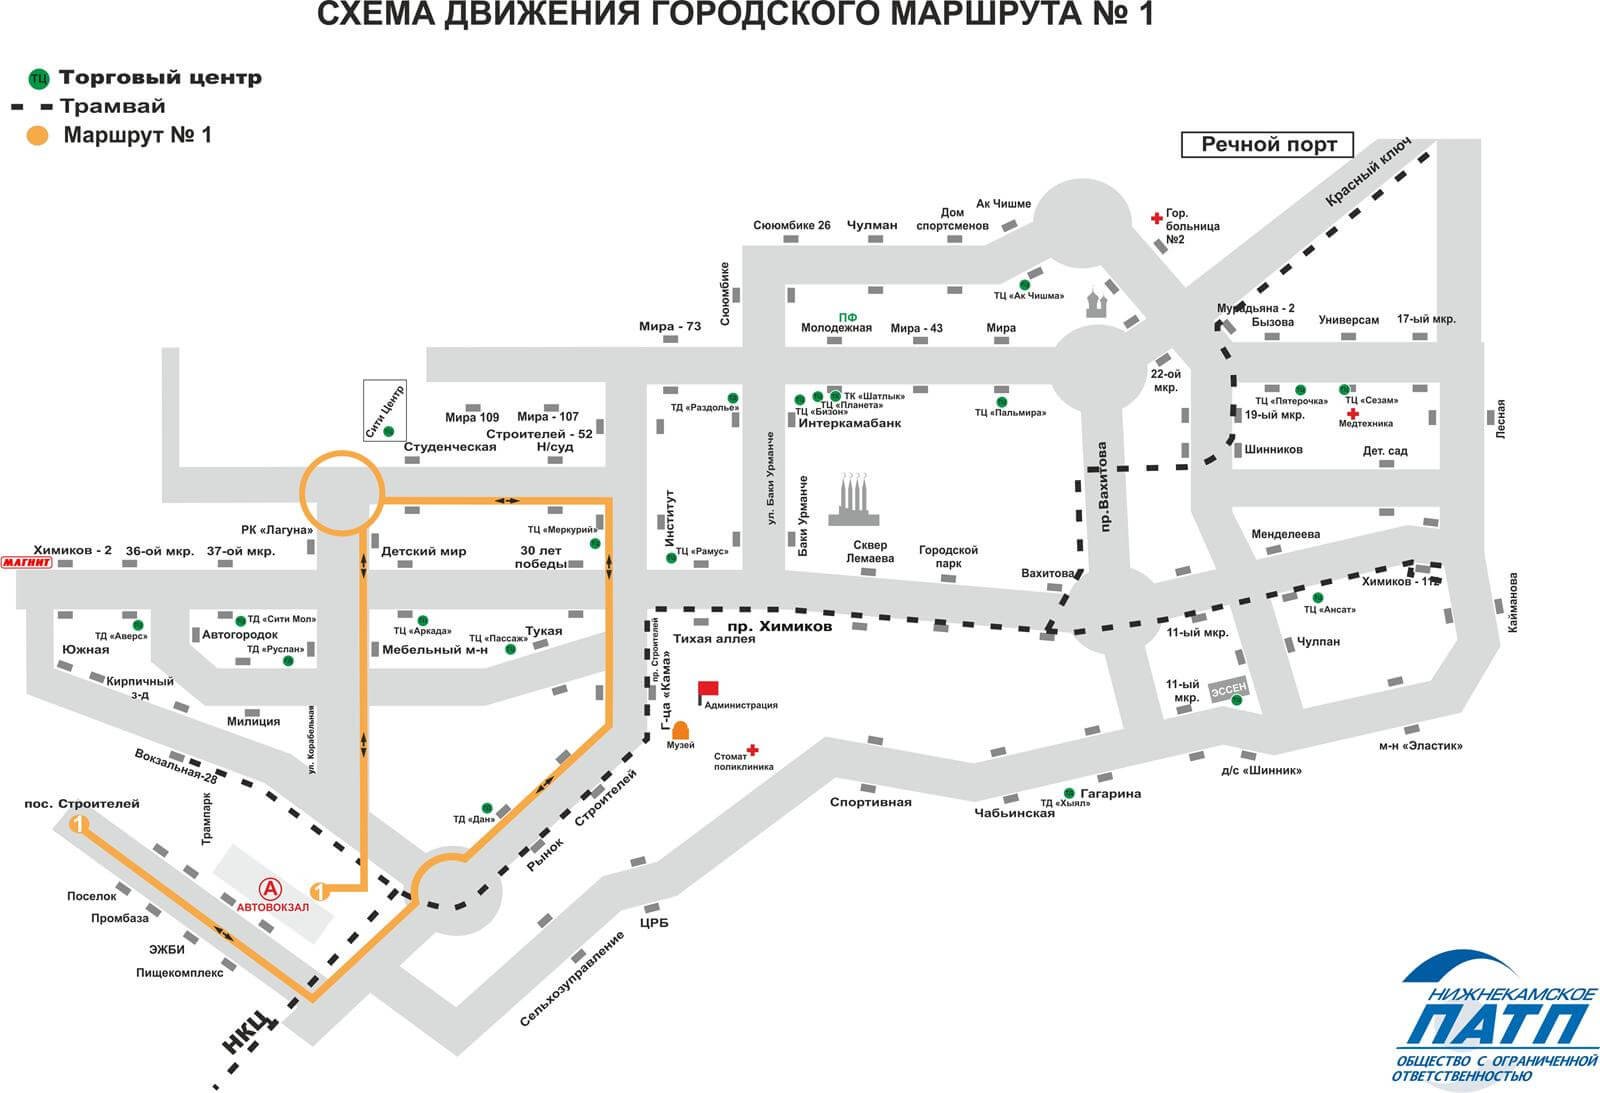 НПАТП маршруты схема 1 маршрута 14.12.2016